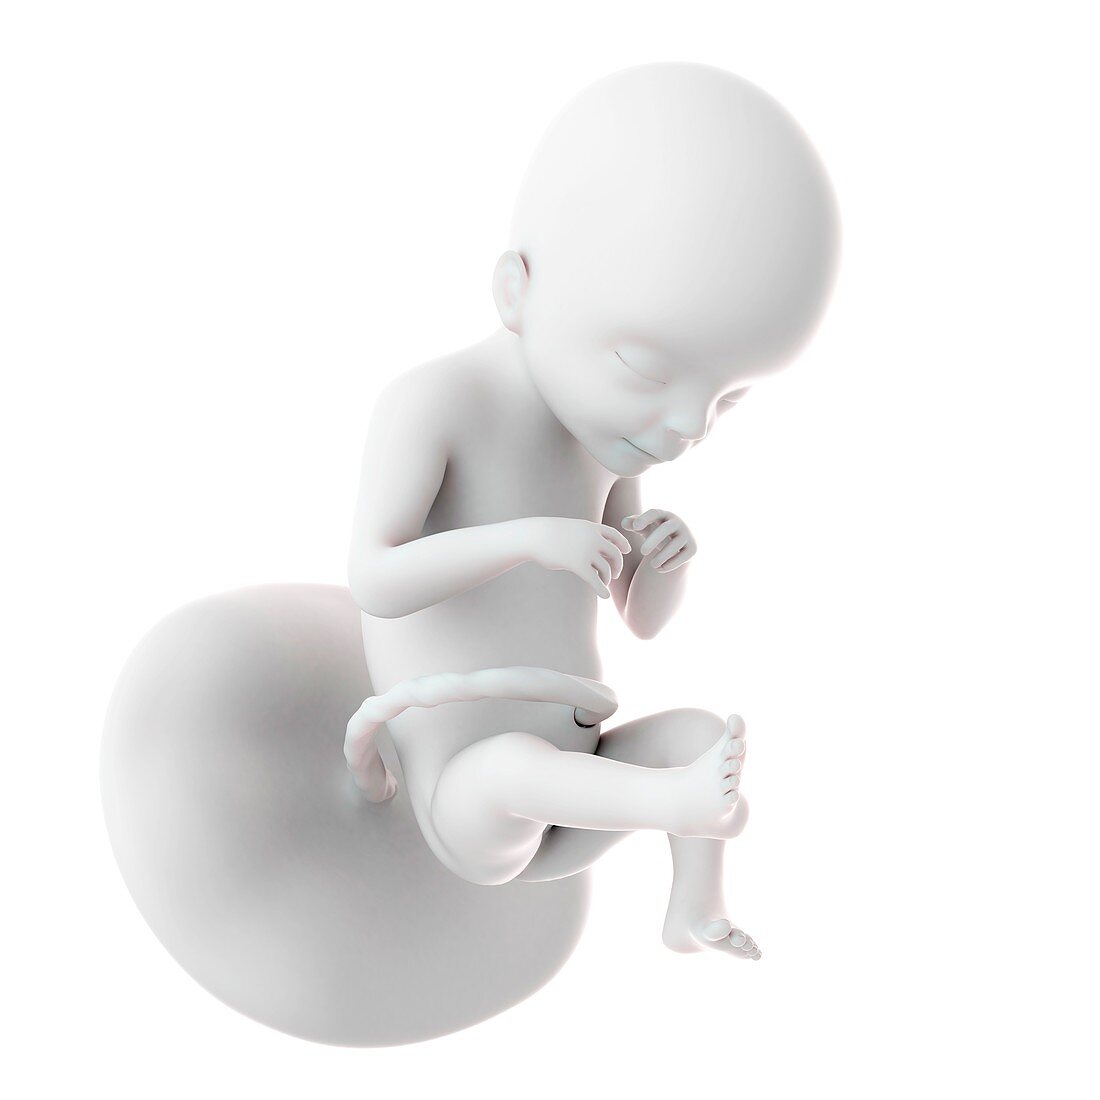 Human fetus age 21 weeks